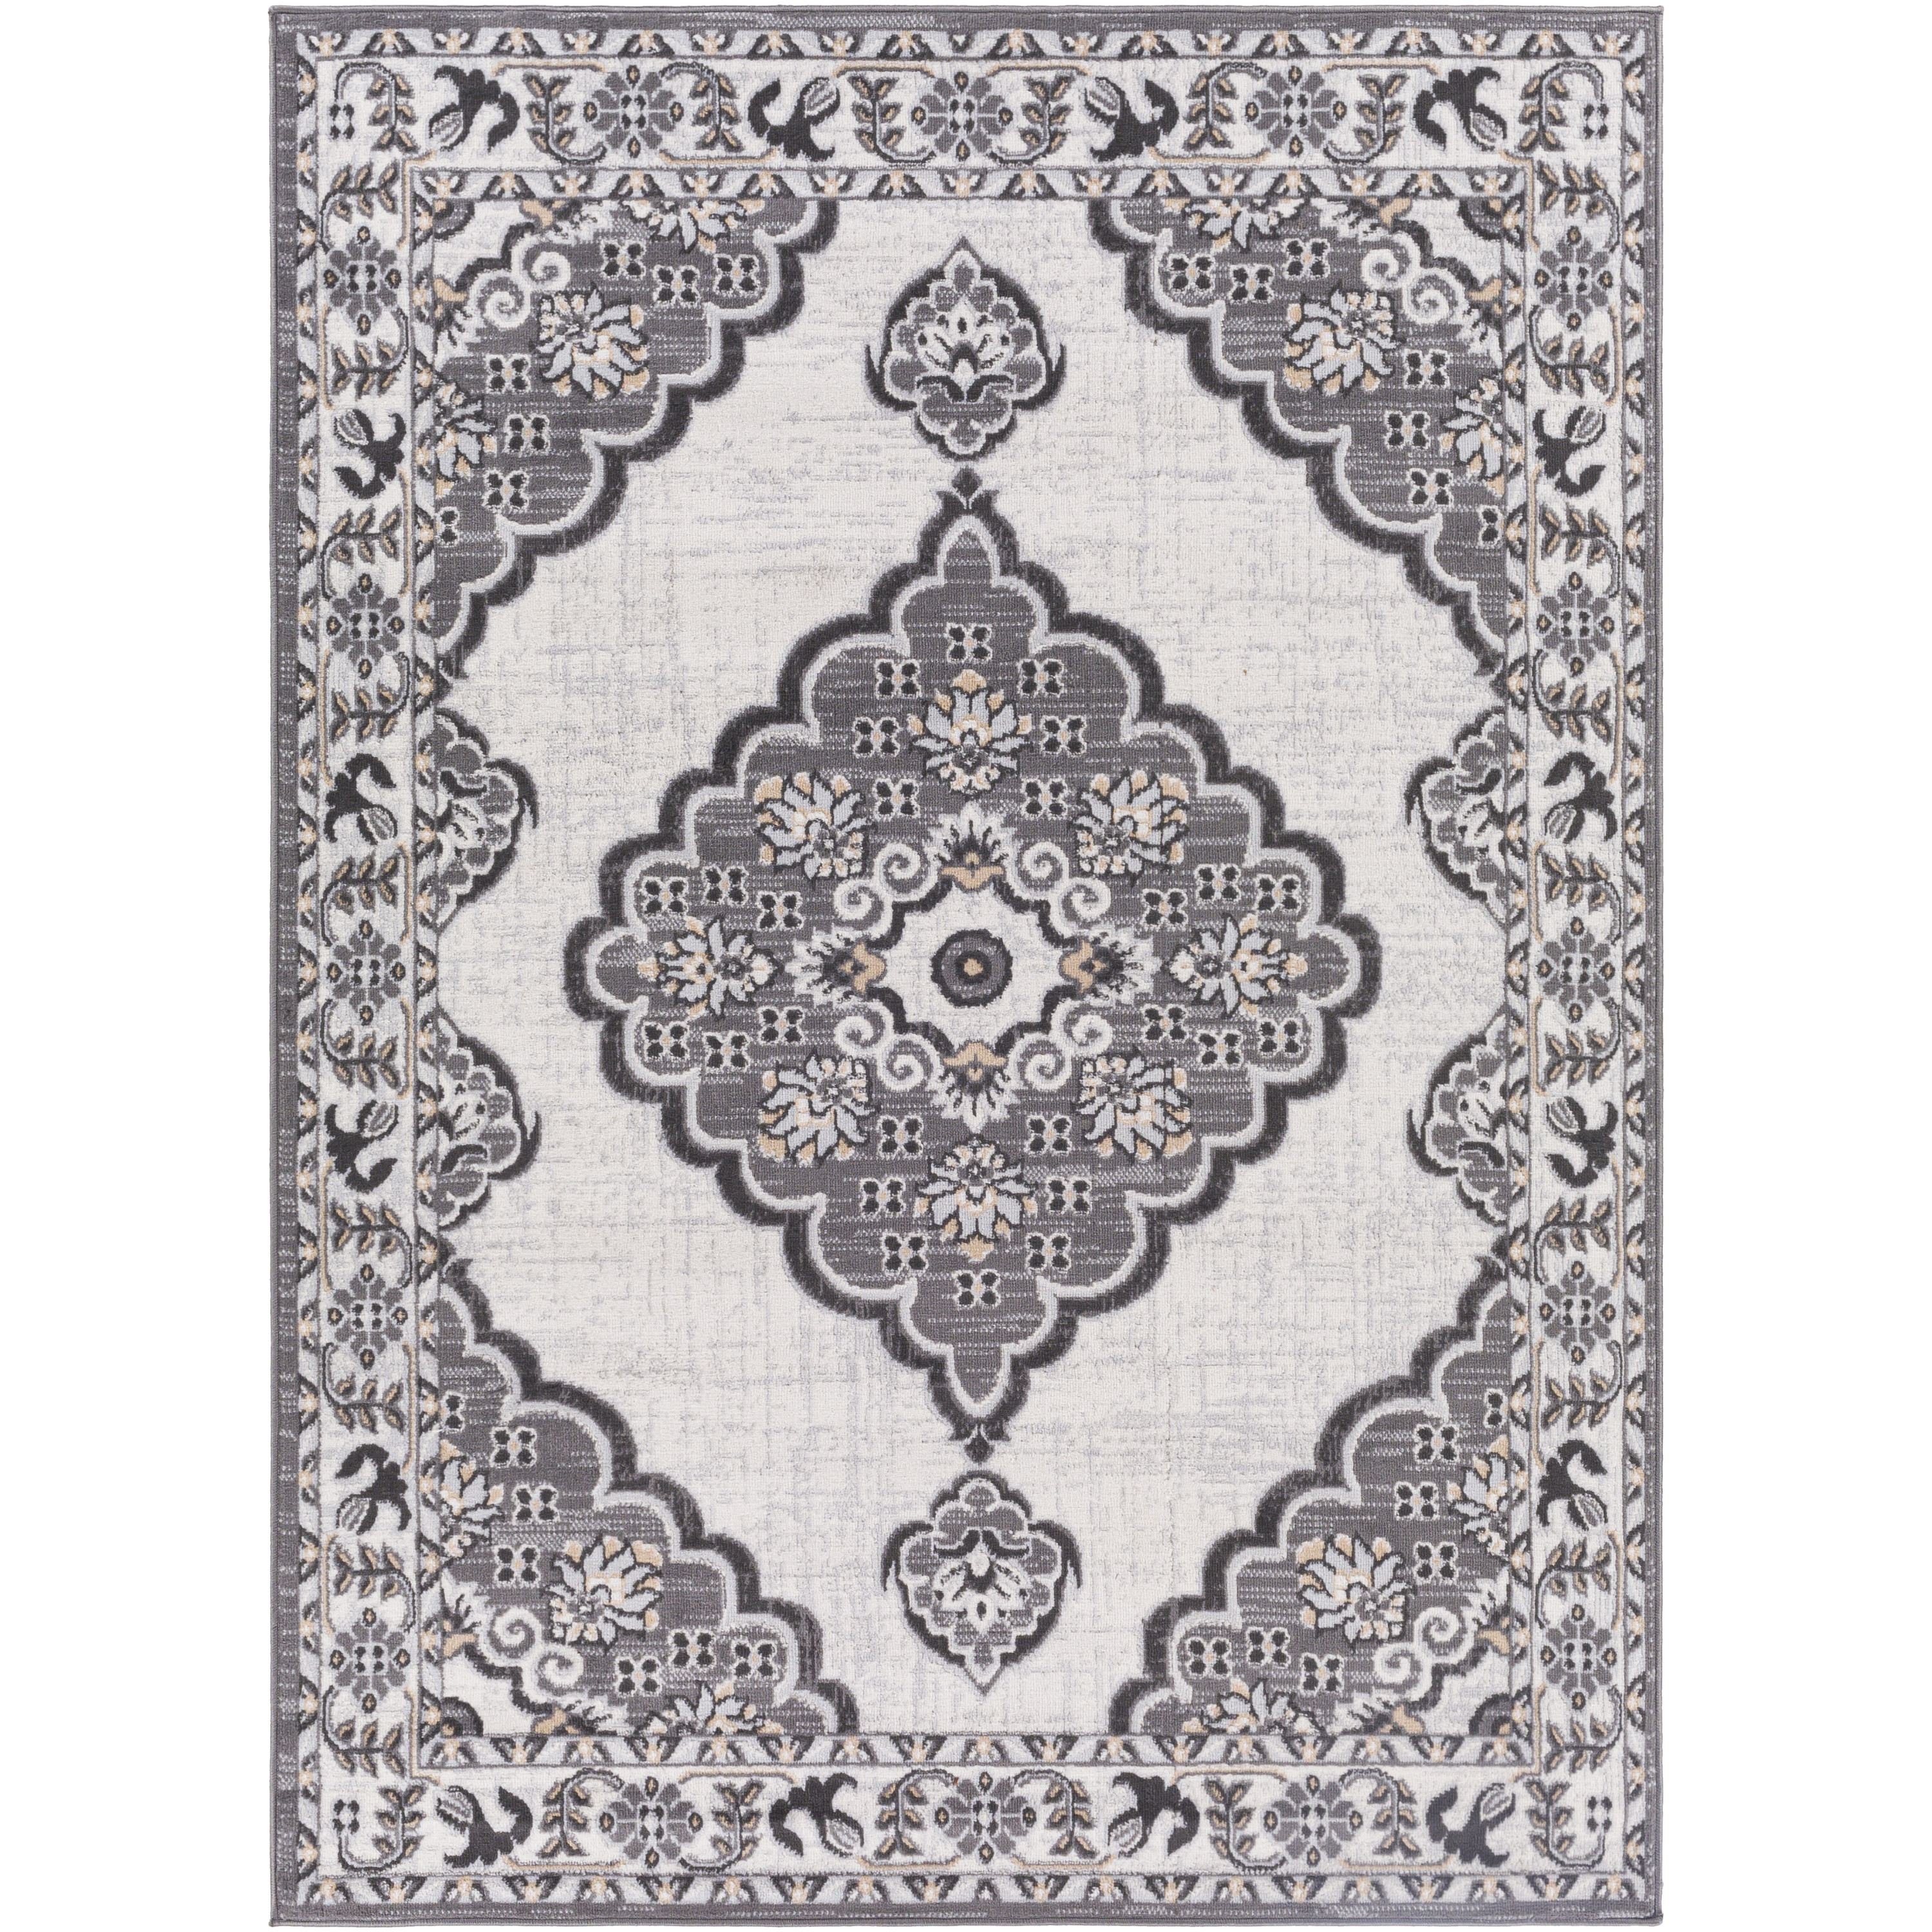 Artistic Weavers Afelpado Gray Oriental 6'7" x 9' Rectangle Area Rug - image 2 of 5